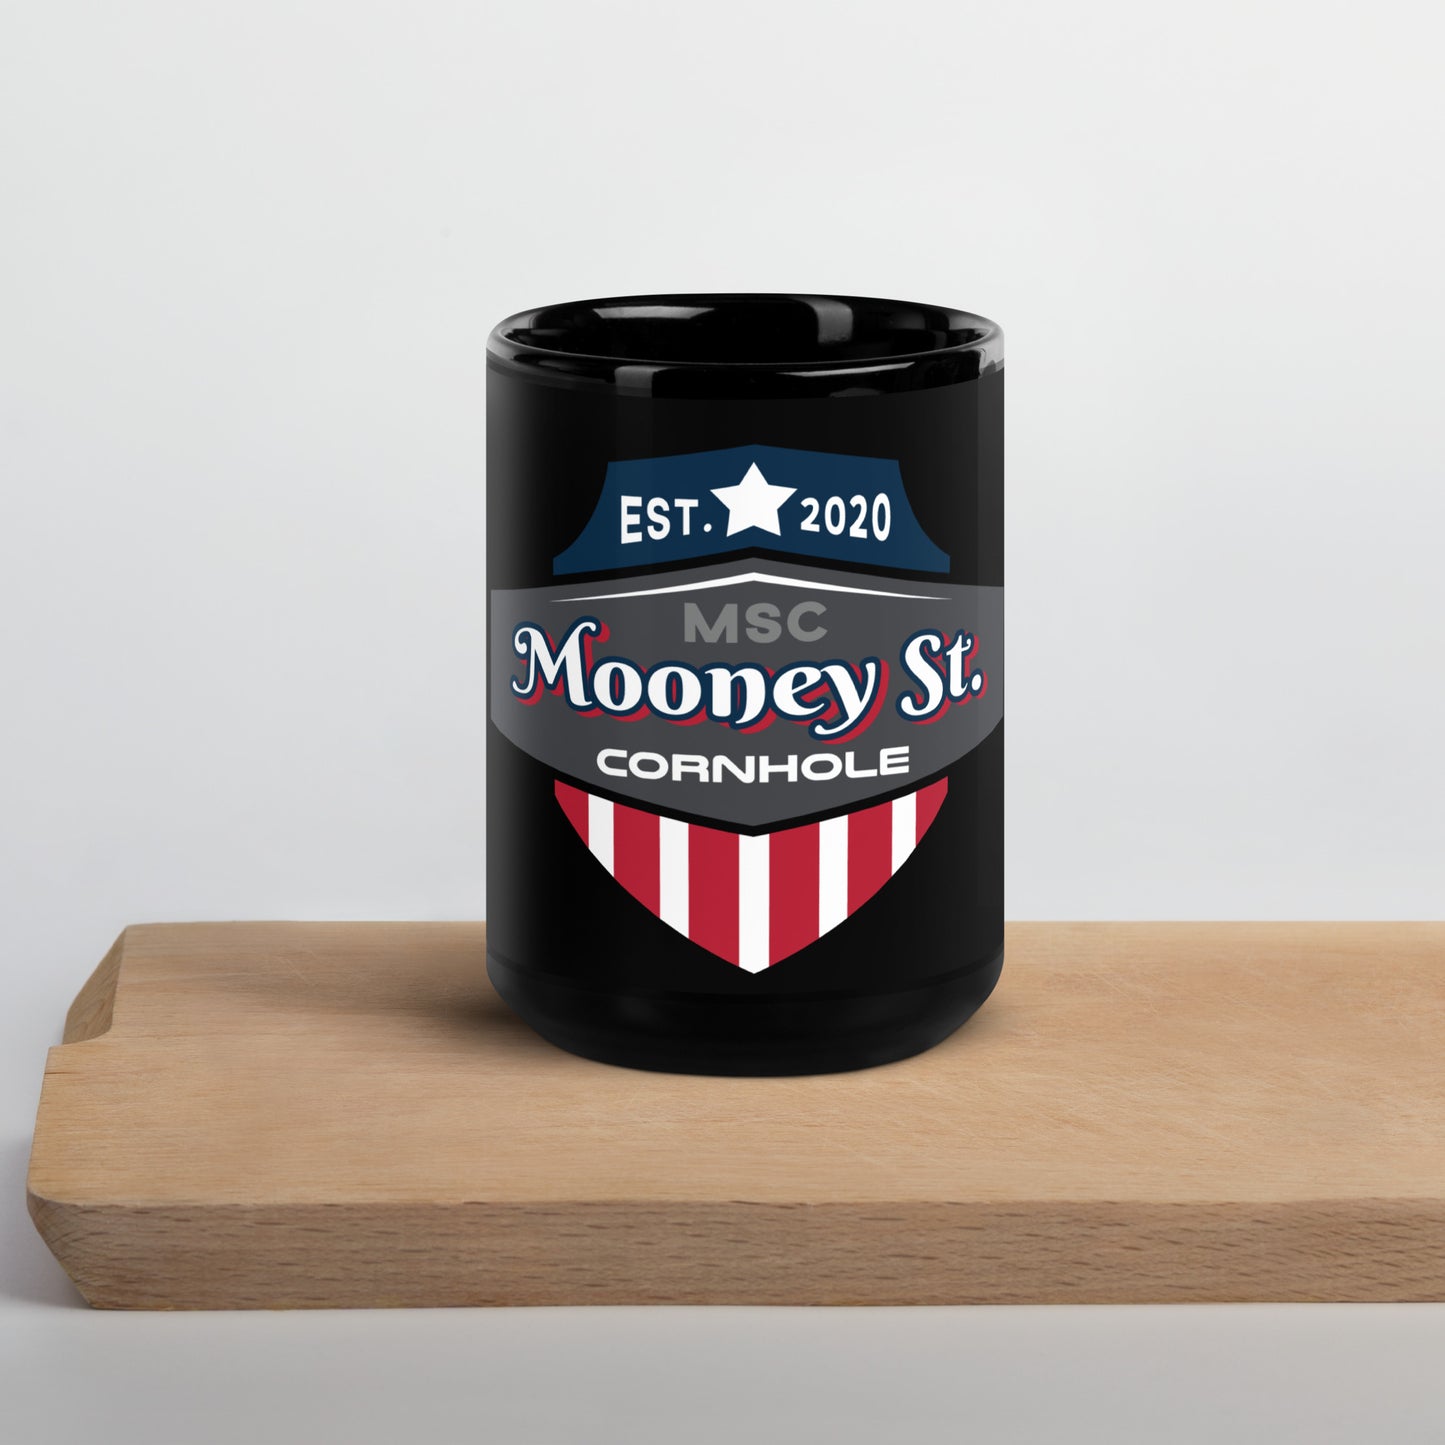 Mooney St. Cornhole Black Glossy Mug